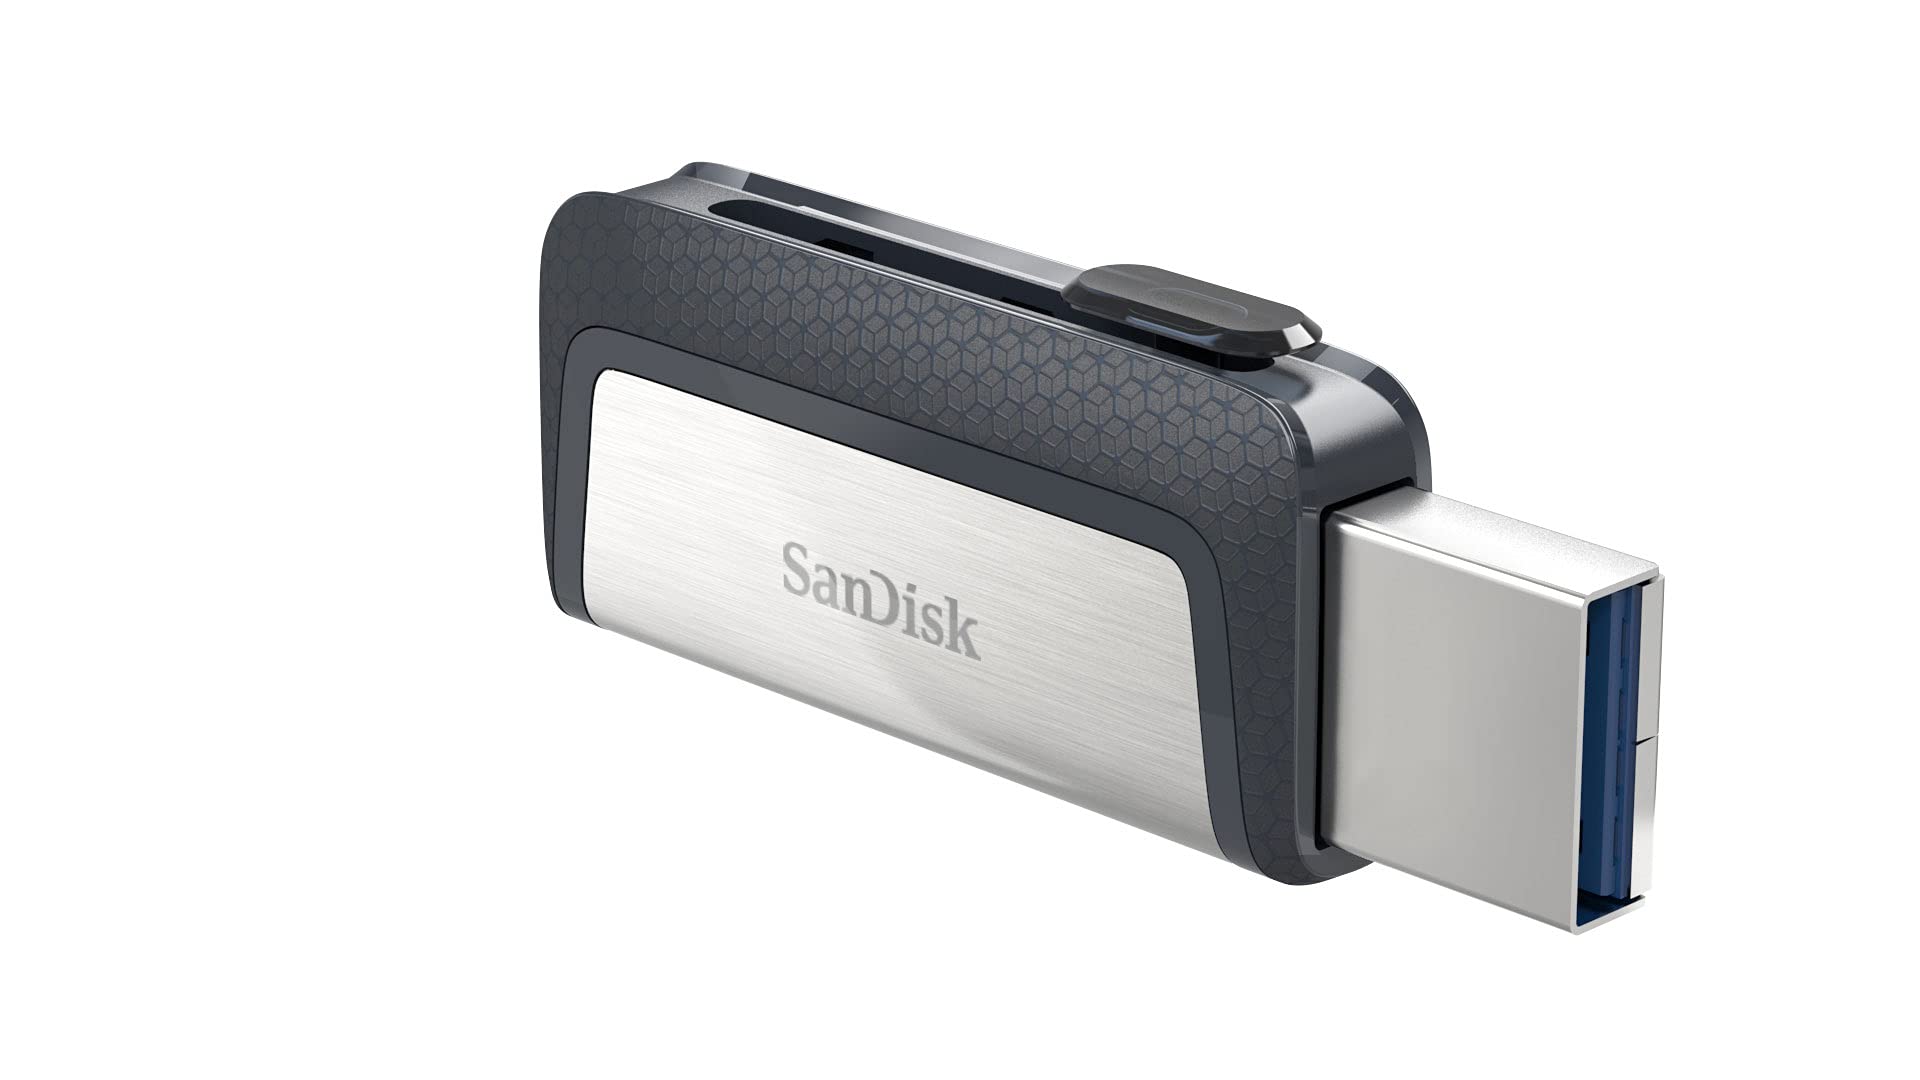 SanDisk 256GB Ultra Dual Drive USB Type-C - USB-C, USB 3.1 $20.29 Free ship with Prime at Amazon